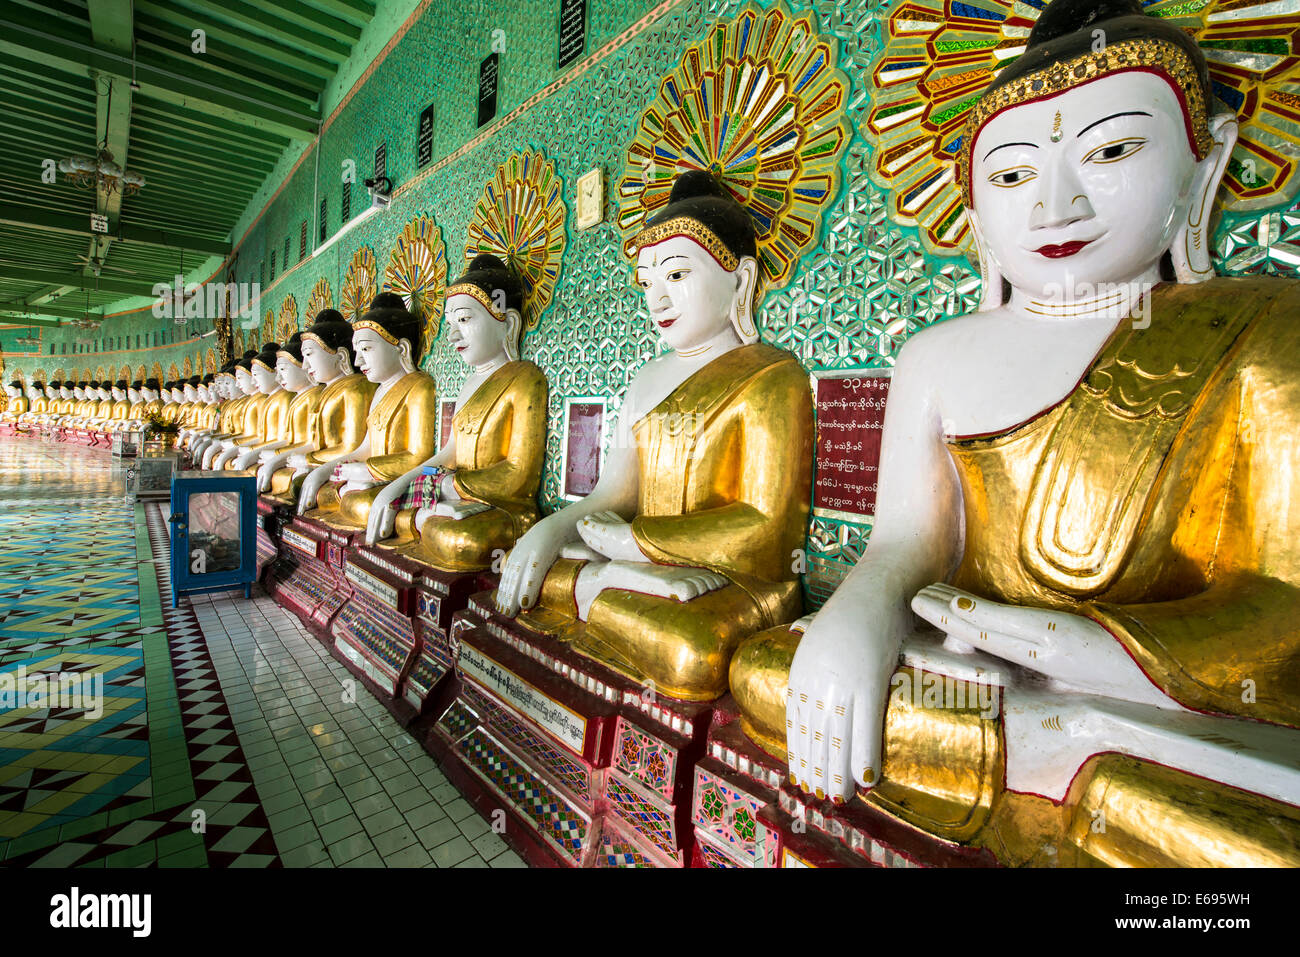 Molti Buddha seduto sculture, pareti decorate con mosaici di vetro, Umin Thounzeh, Umin Thonse o U Min Pagoda Thonze o 30 grotte Foto Stock